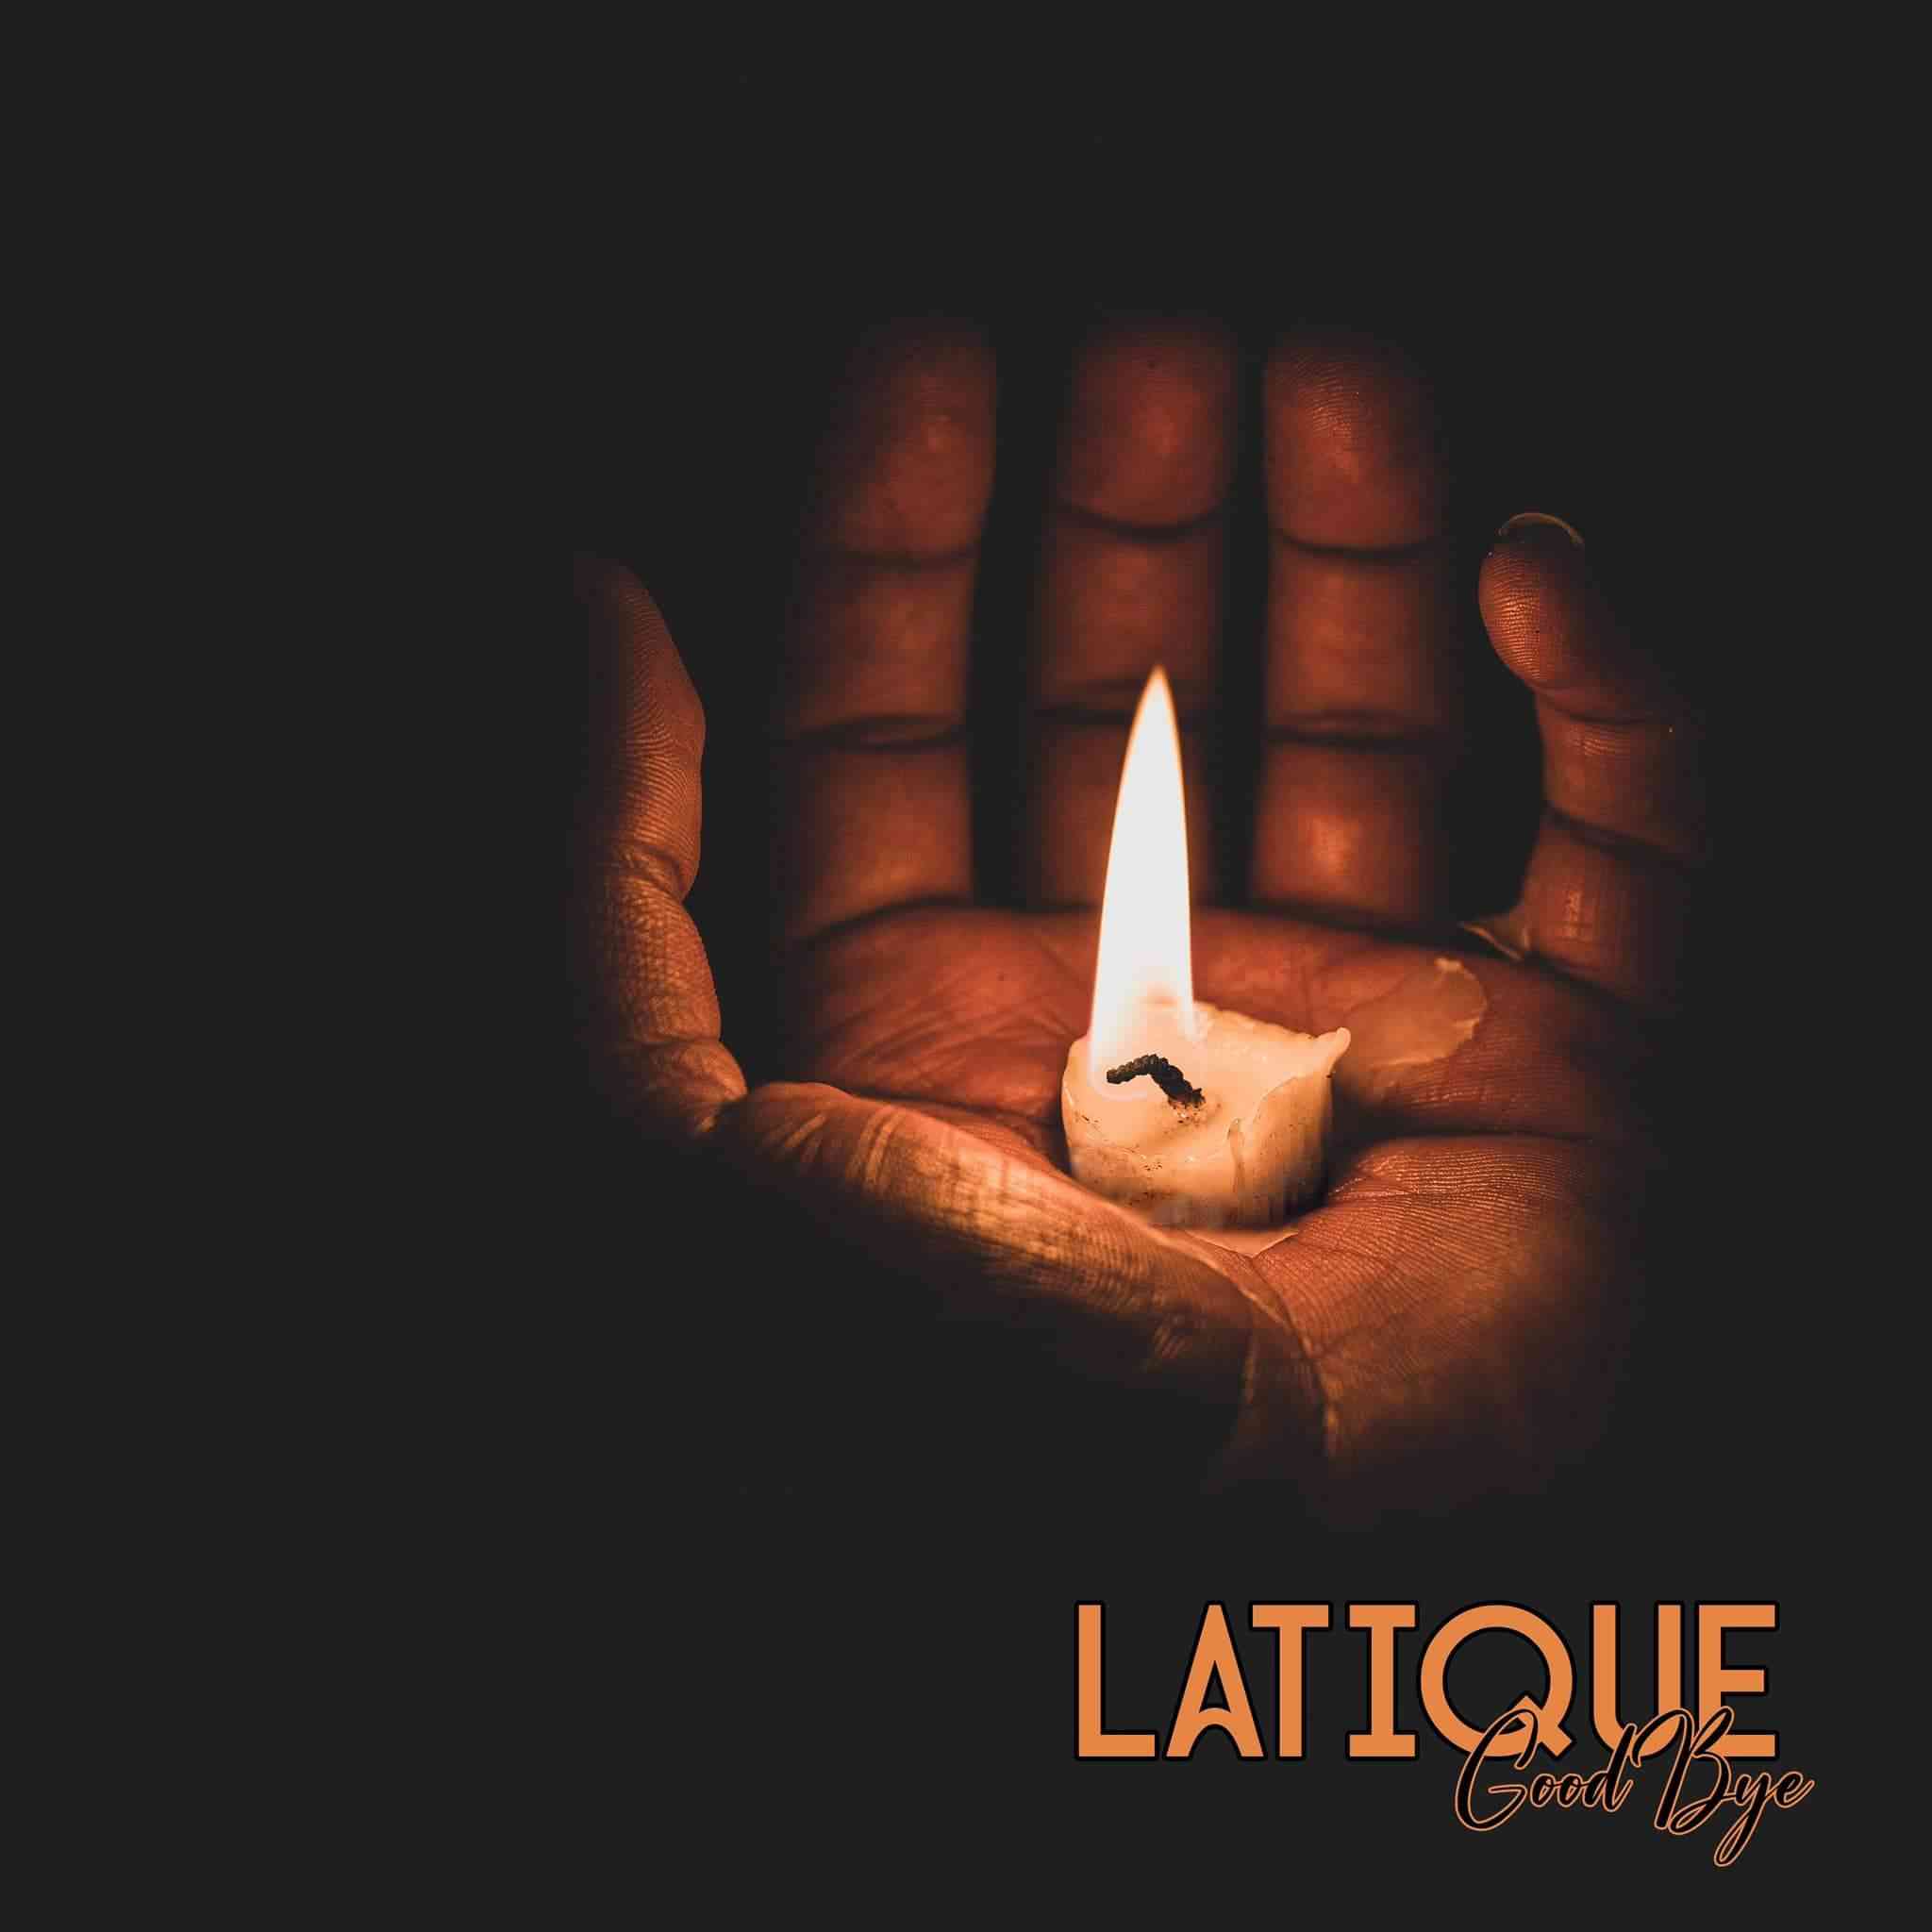 LaTique Drops "Goodbye" 